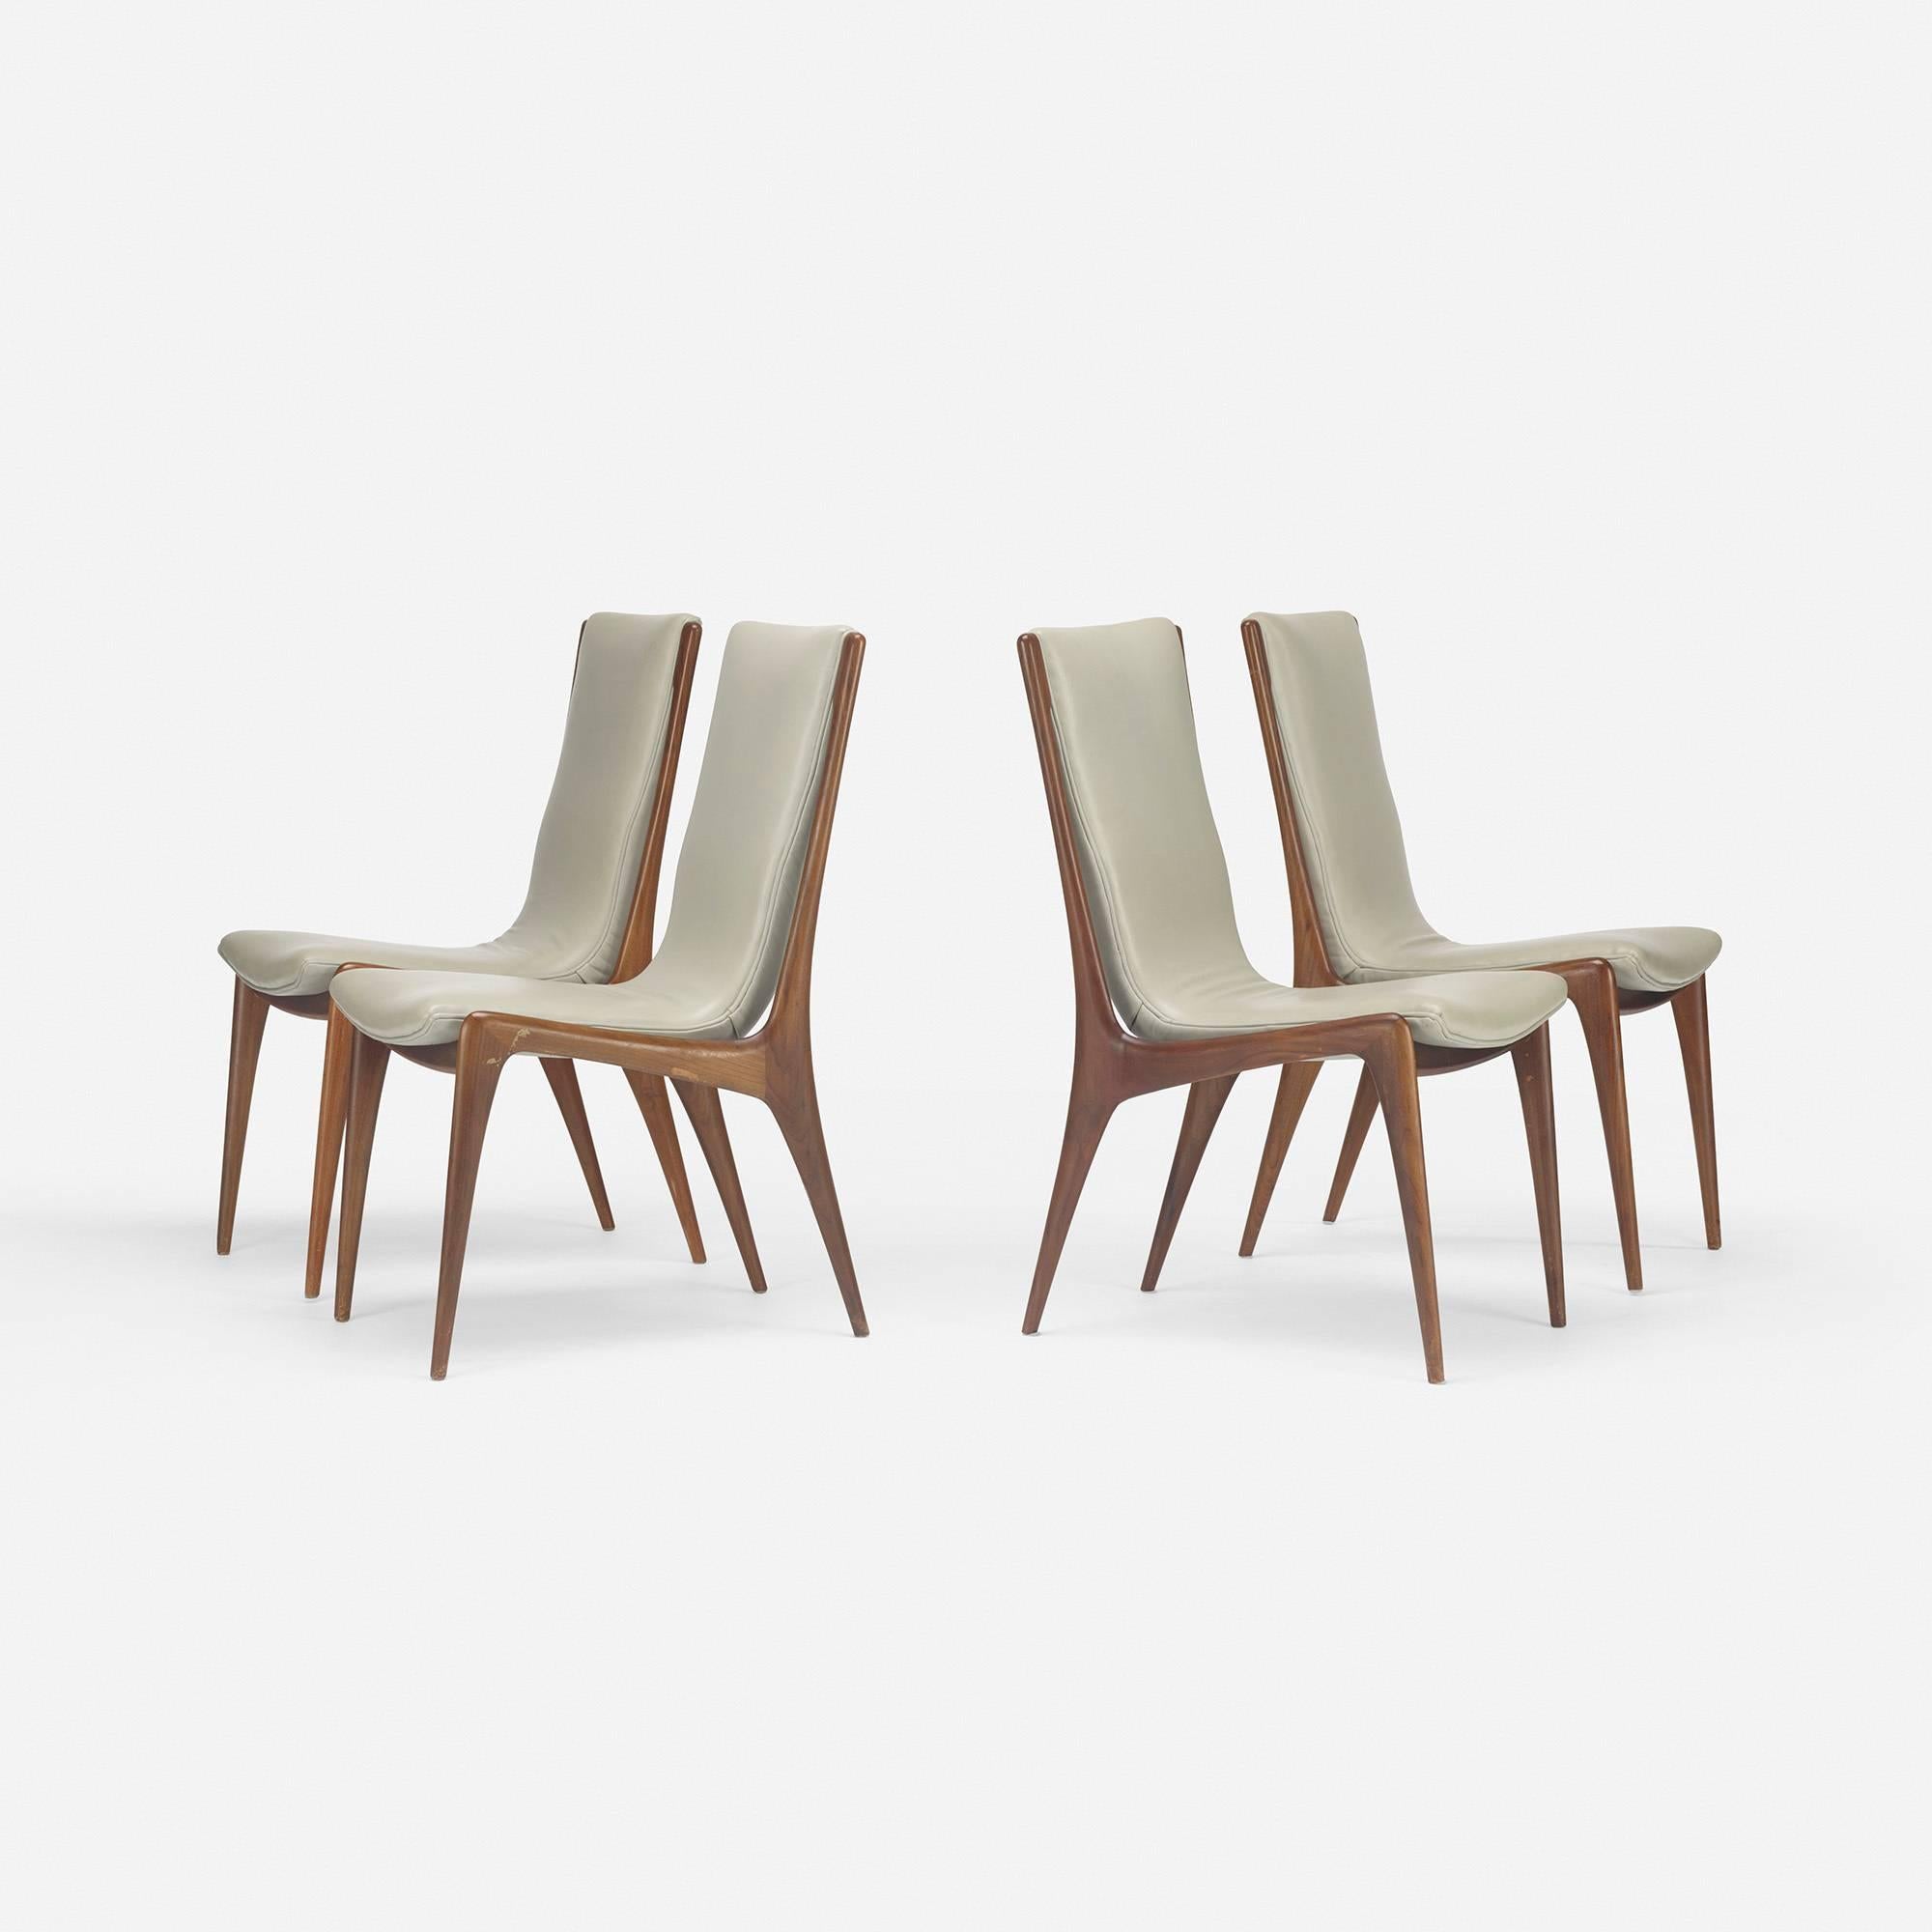 Sling dining chairs model VK 101, set of four by Vladimir Kagan for Kagan-Dreyfuss, Inc.